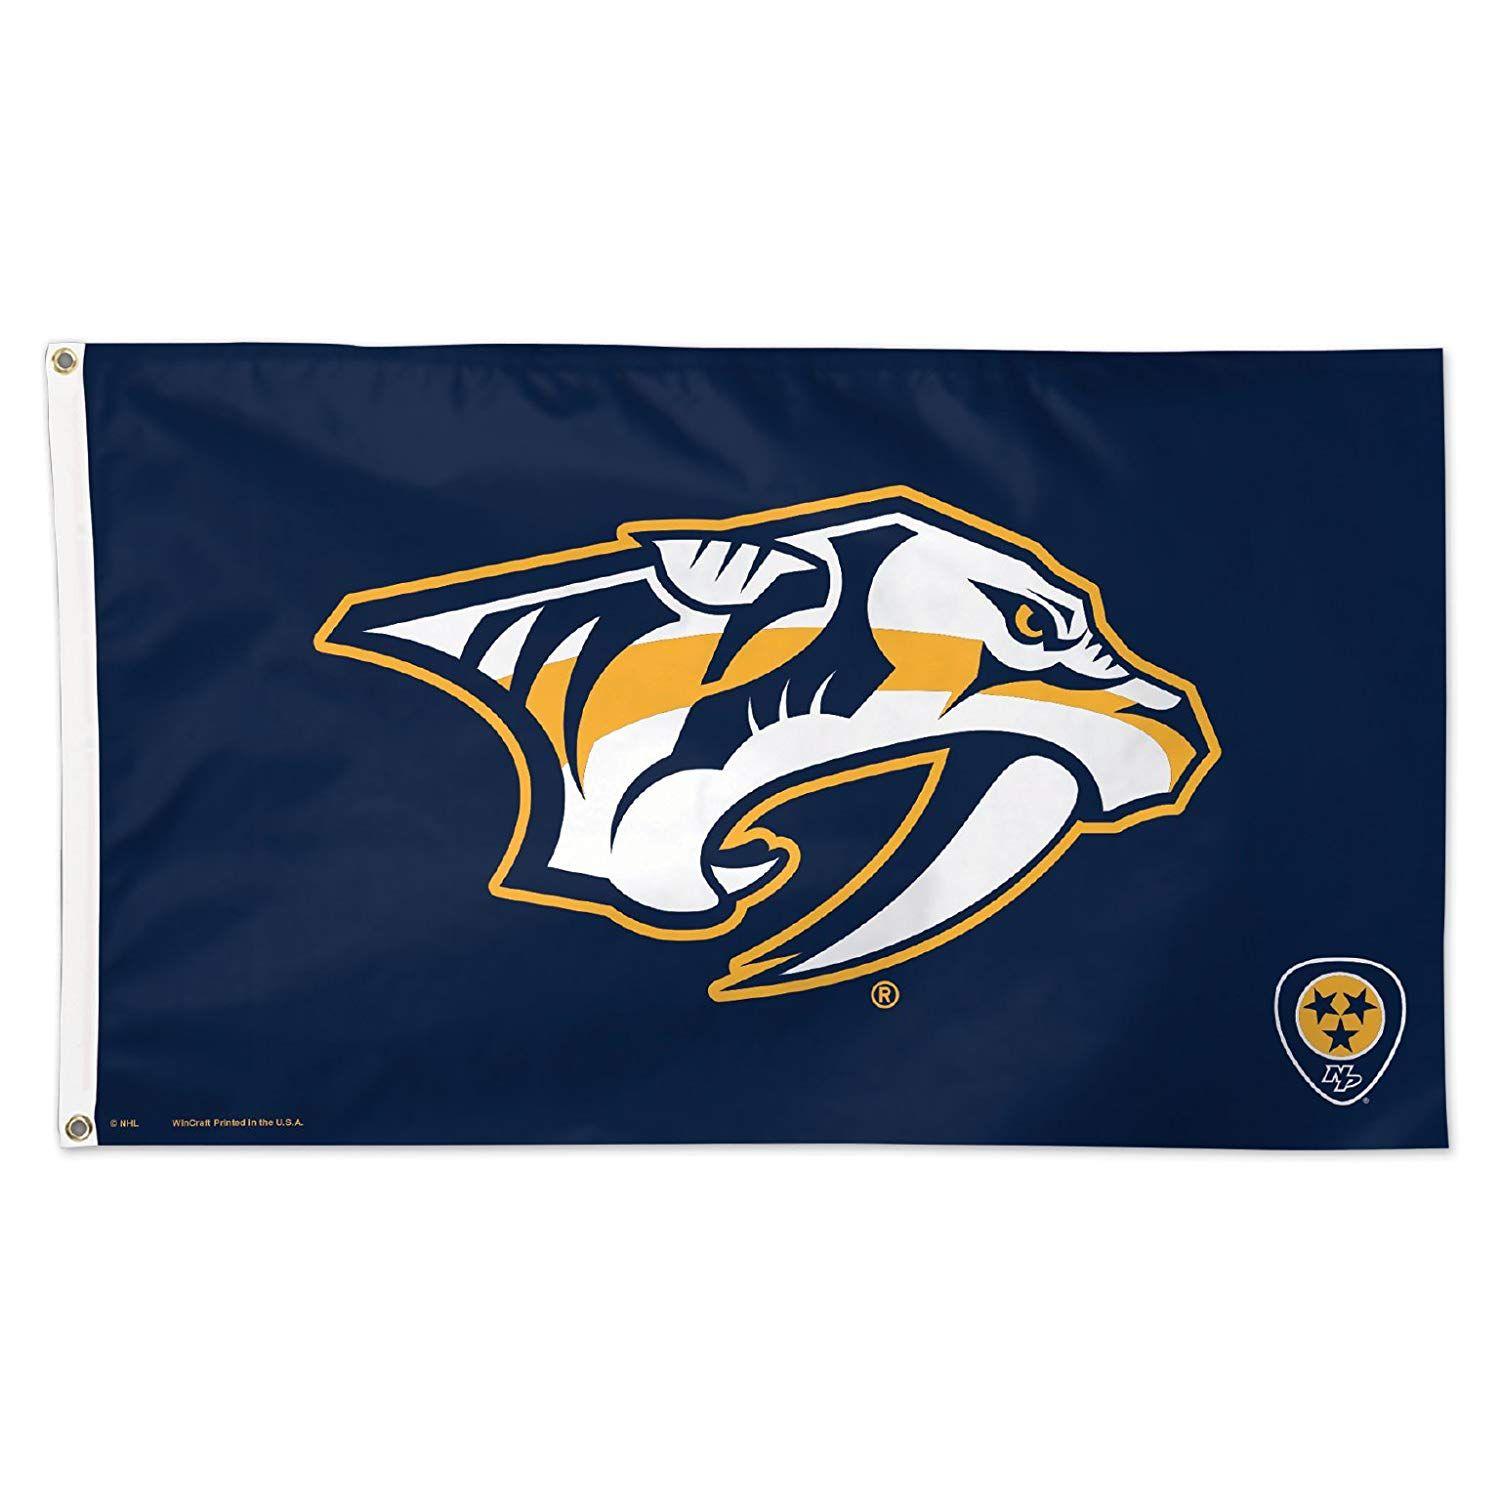 Preds Logo - Amazon.com : Wincraft Nashville Predators Blue 3x5 Foot NHL Flag